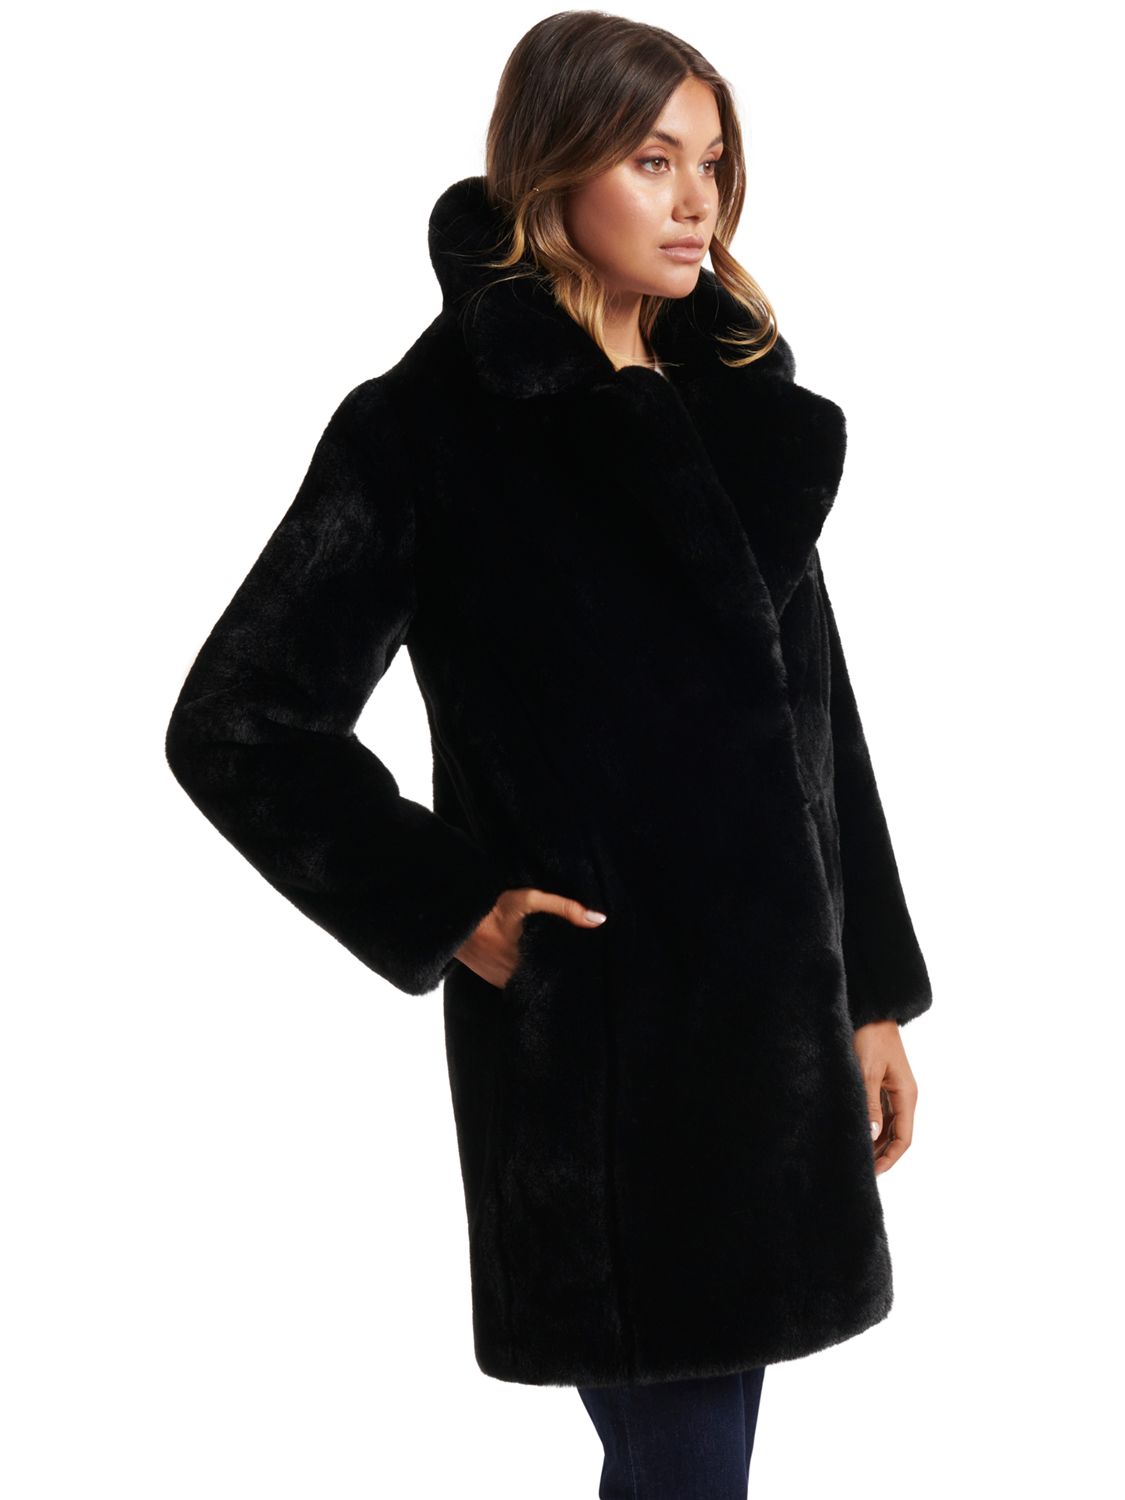 Forever New Cayte Faux Fur Coat, Black, 6